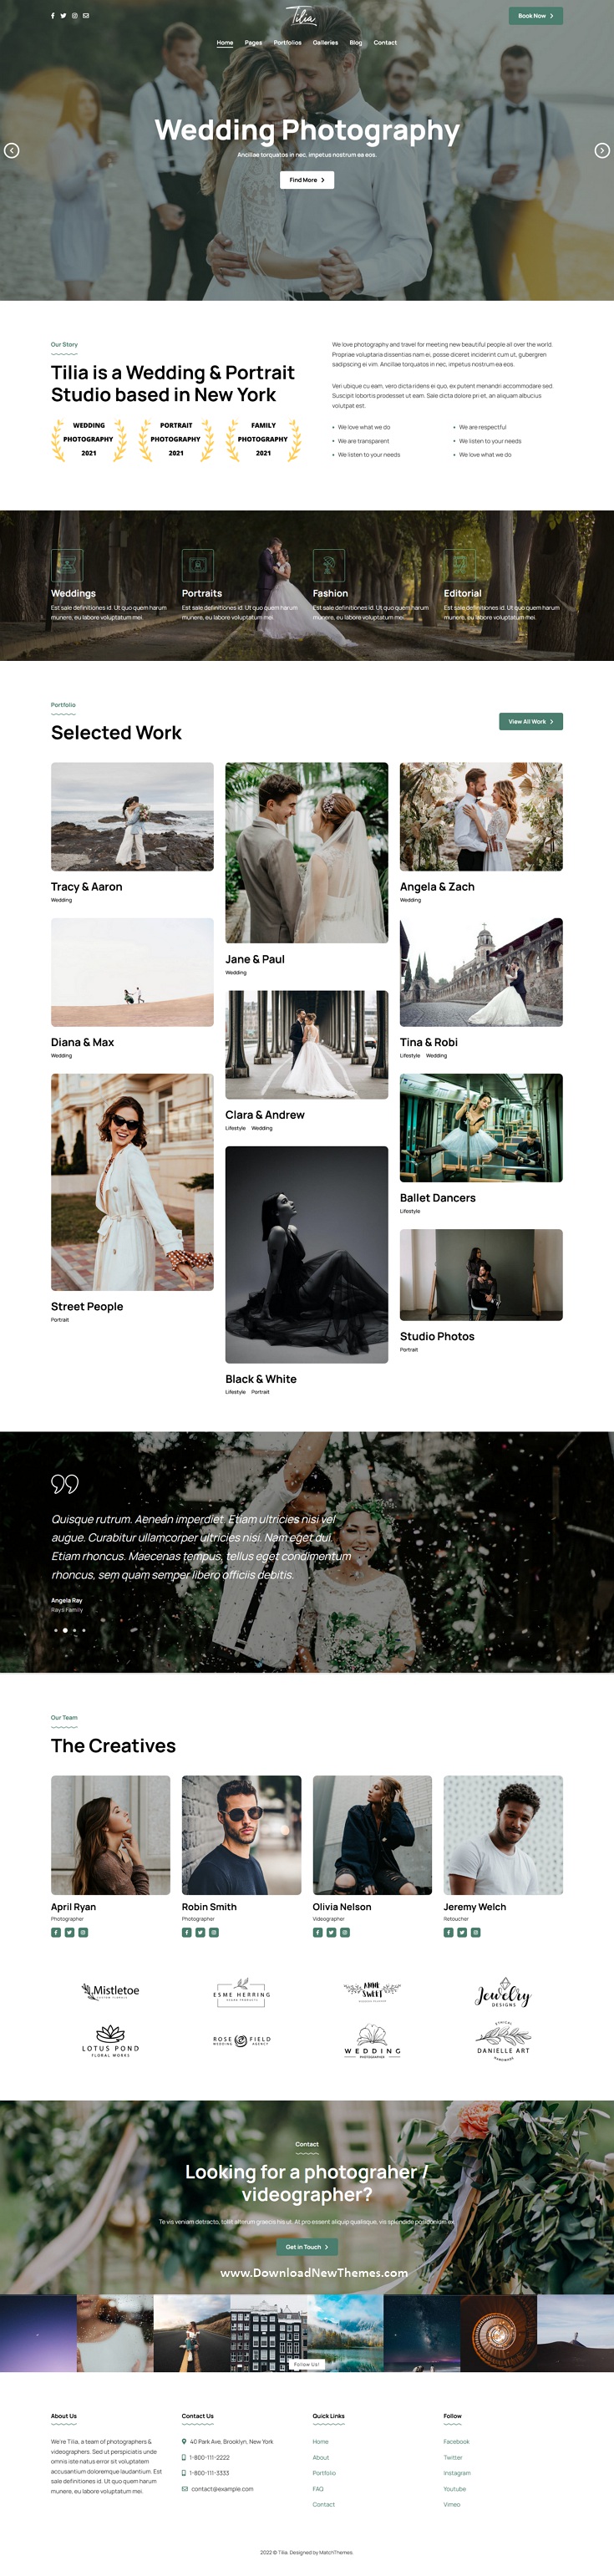 Tilia - Wedding Photography Portfolio Bootstrap Template Review